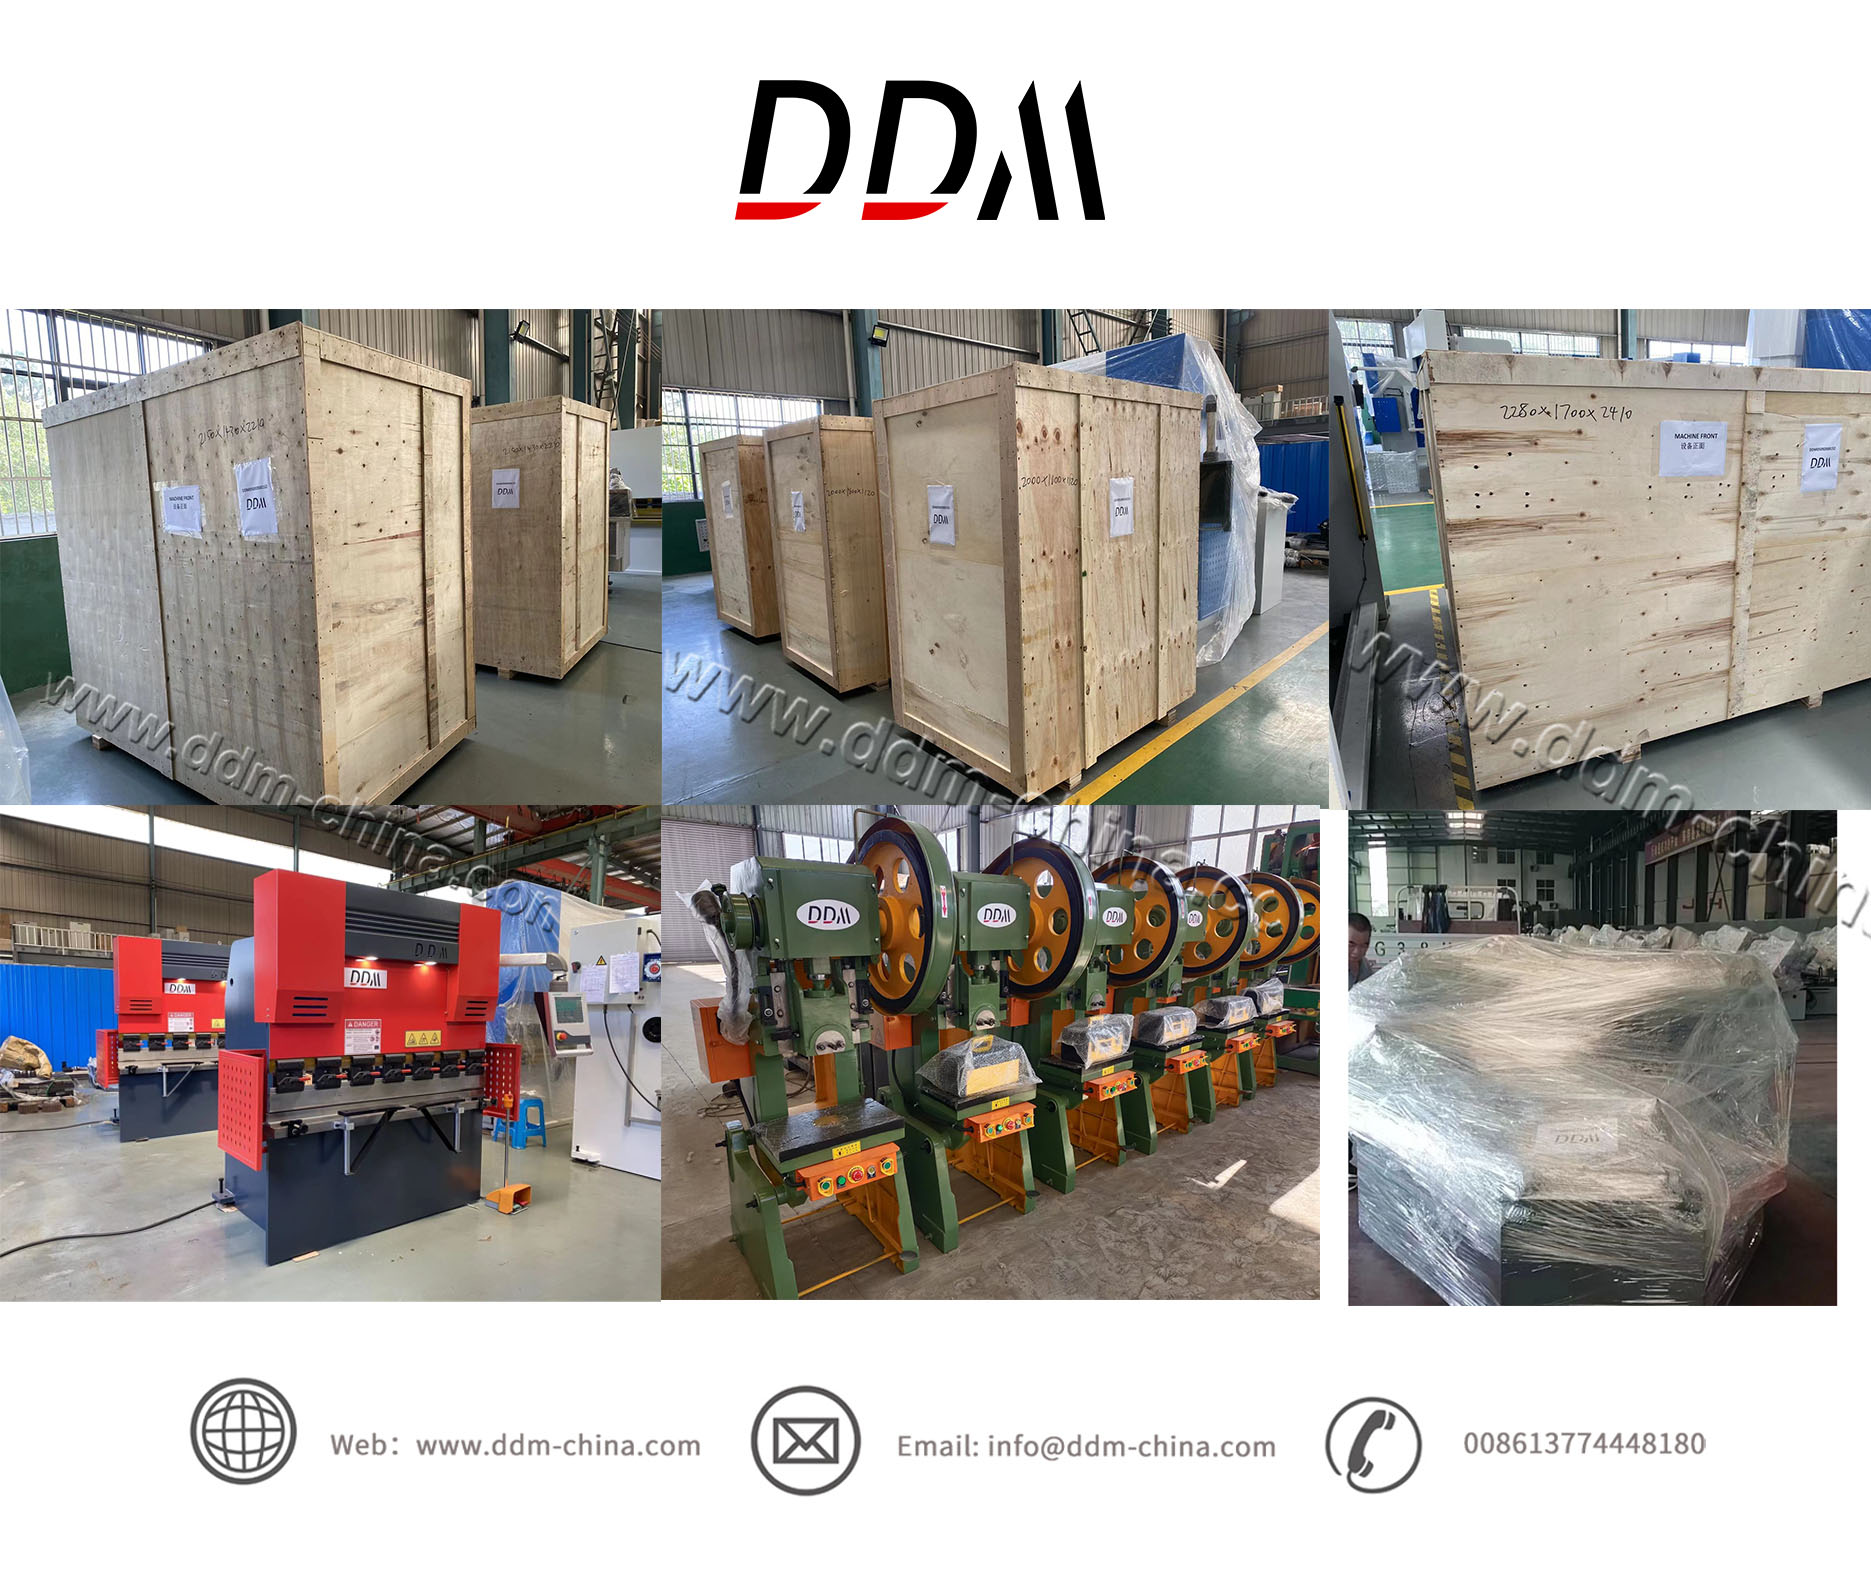 DDM Machine delivered to Agentina 